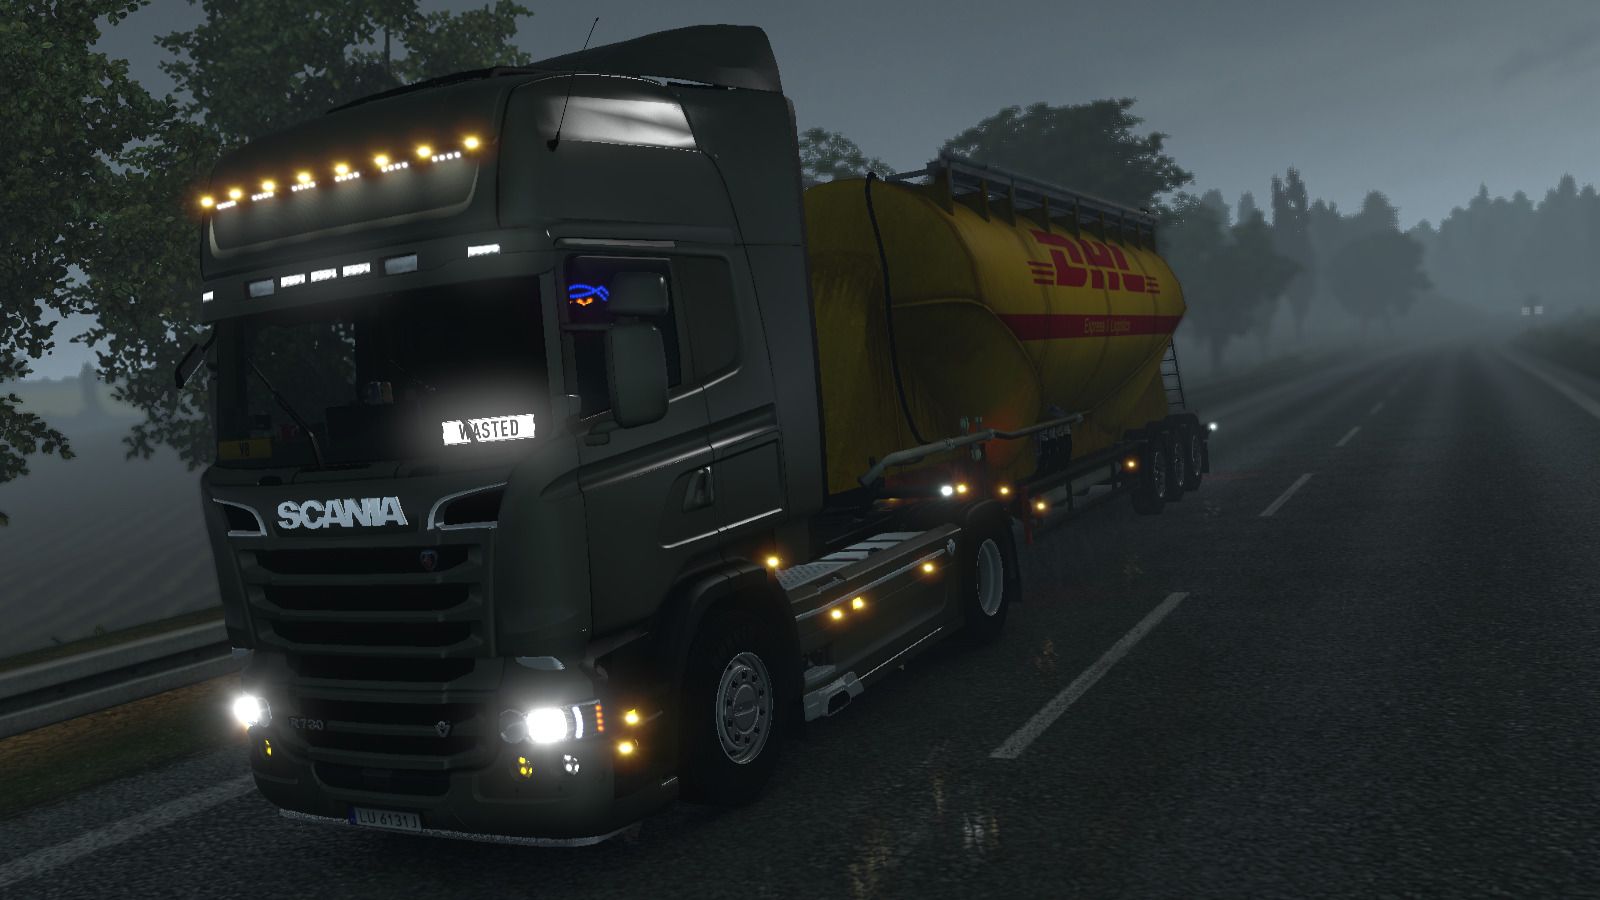 Scania, Euro Truck Simulator Trucks .wallup.net